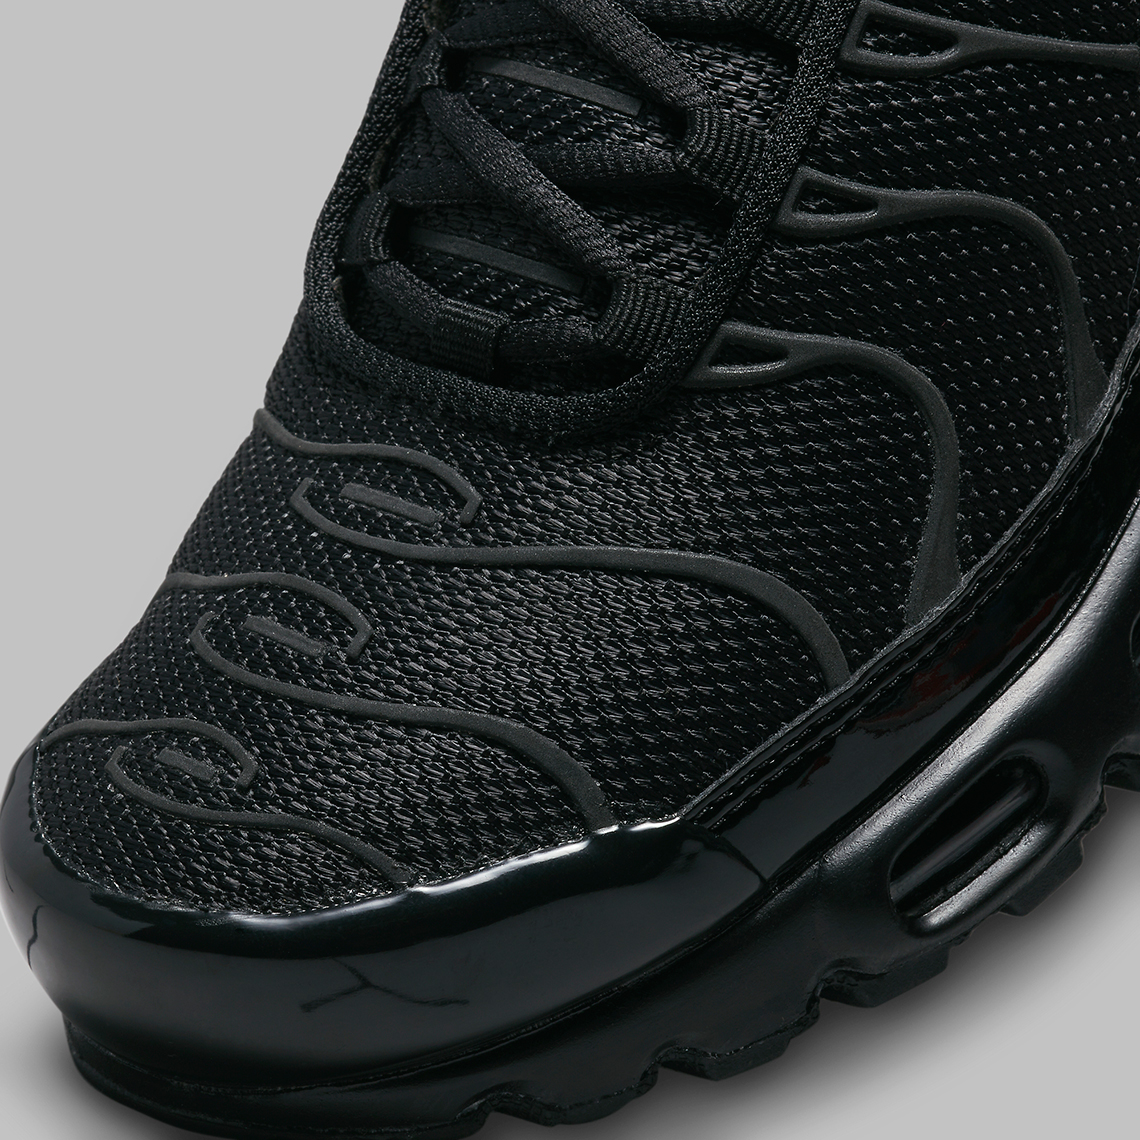 Nike Air Pegasus 89 SE sneakers Plus Triple Black Reflective Fb8479 001 6